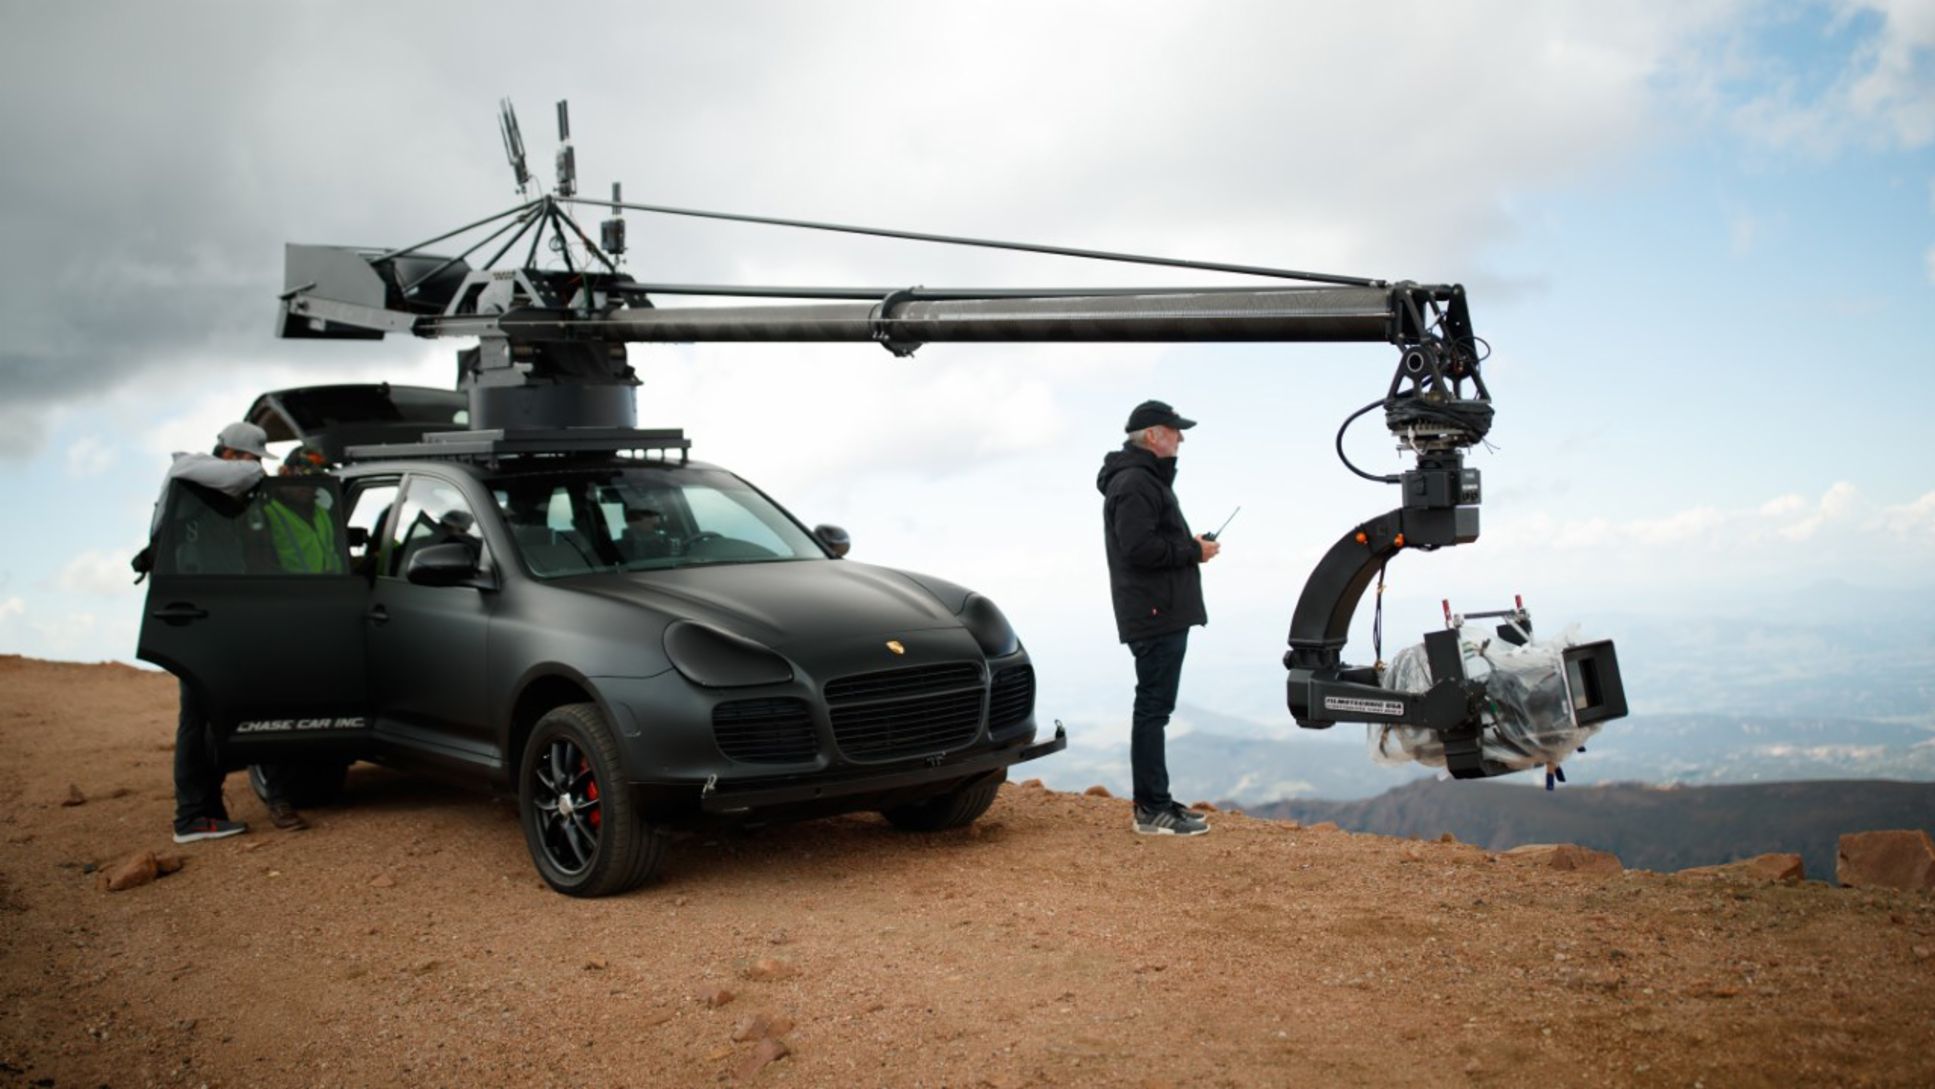 Filmmaking with Jeff Zwart, 2020, Porsche AG